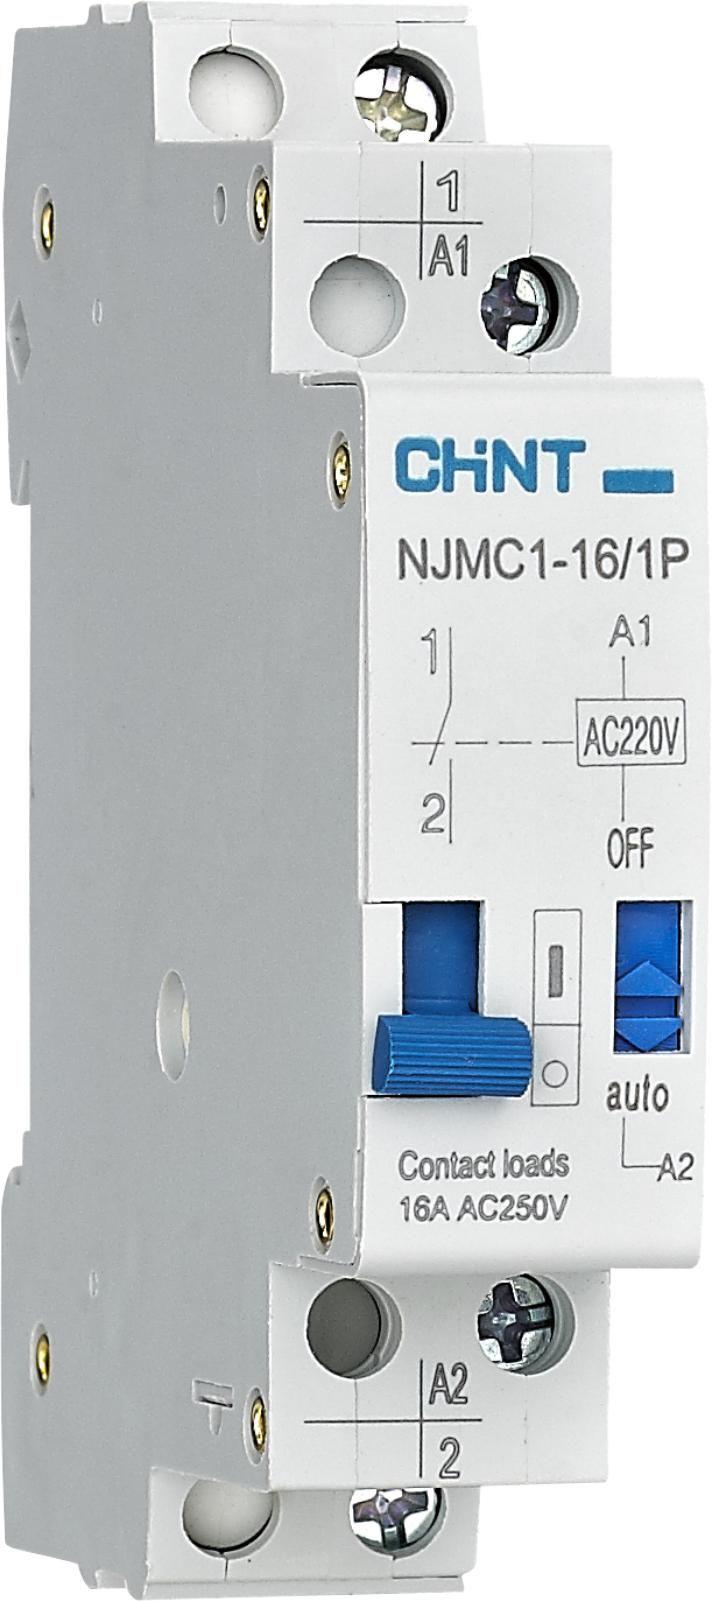 NJMC1-16 1P 脉冲继电器侧仰图.png